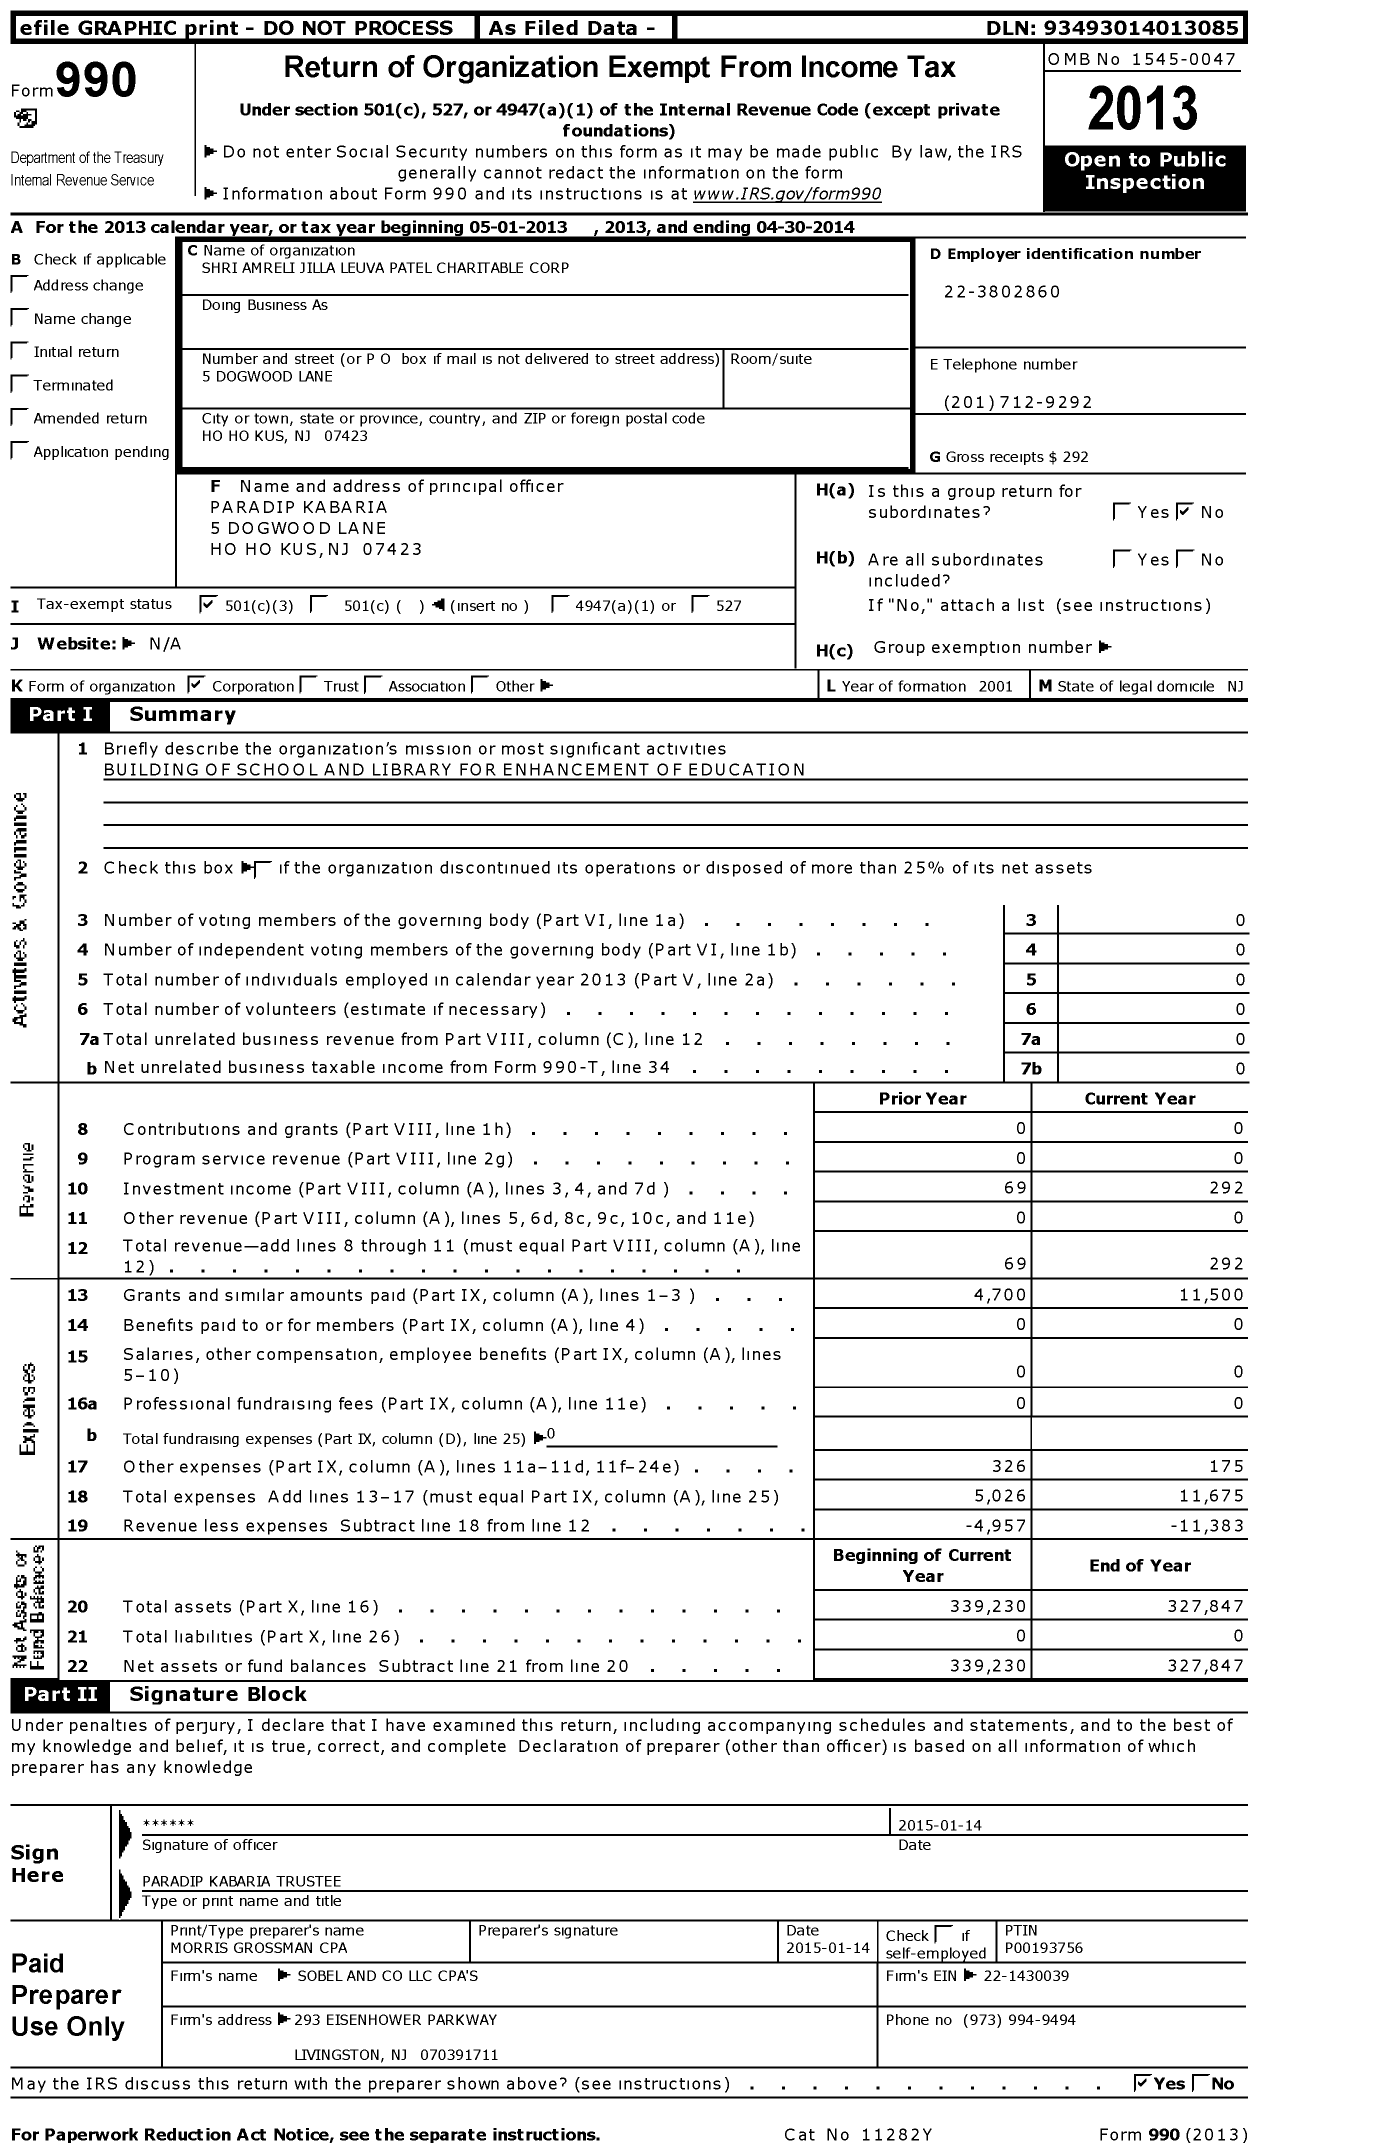 Image of first page of 2013 Form 990 for Shri Amreli Jilla Leuva Patel Charitable Corporation